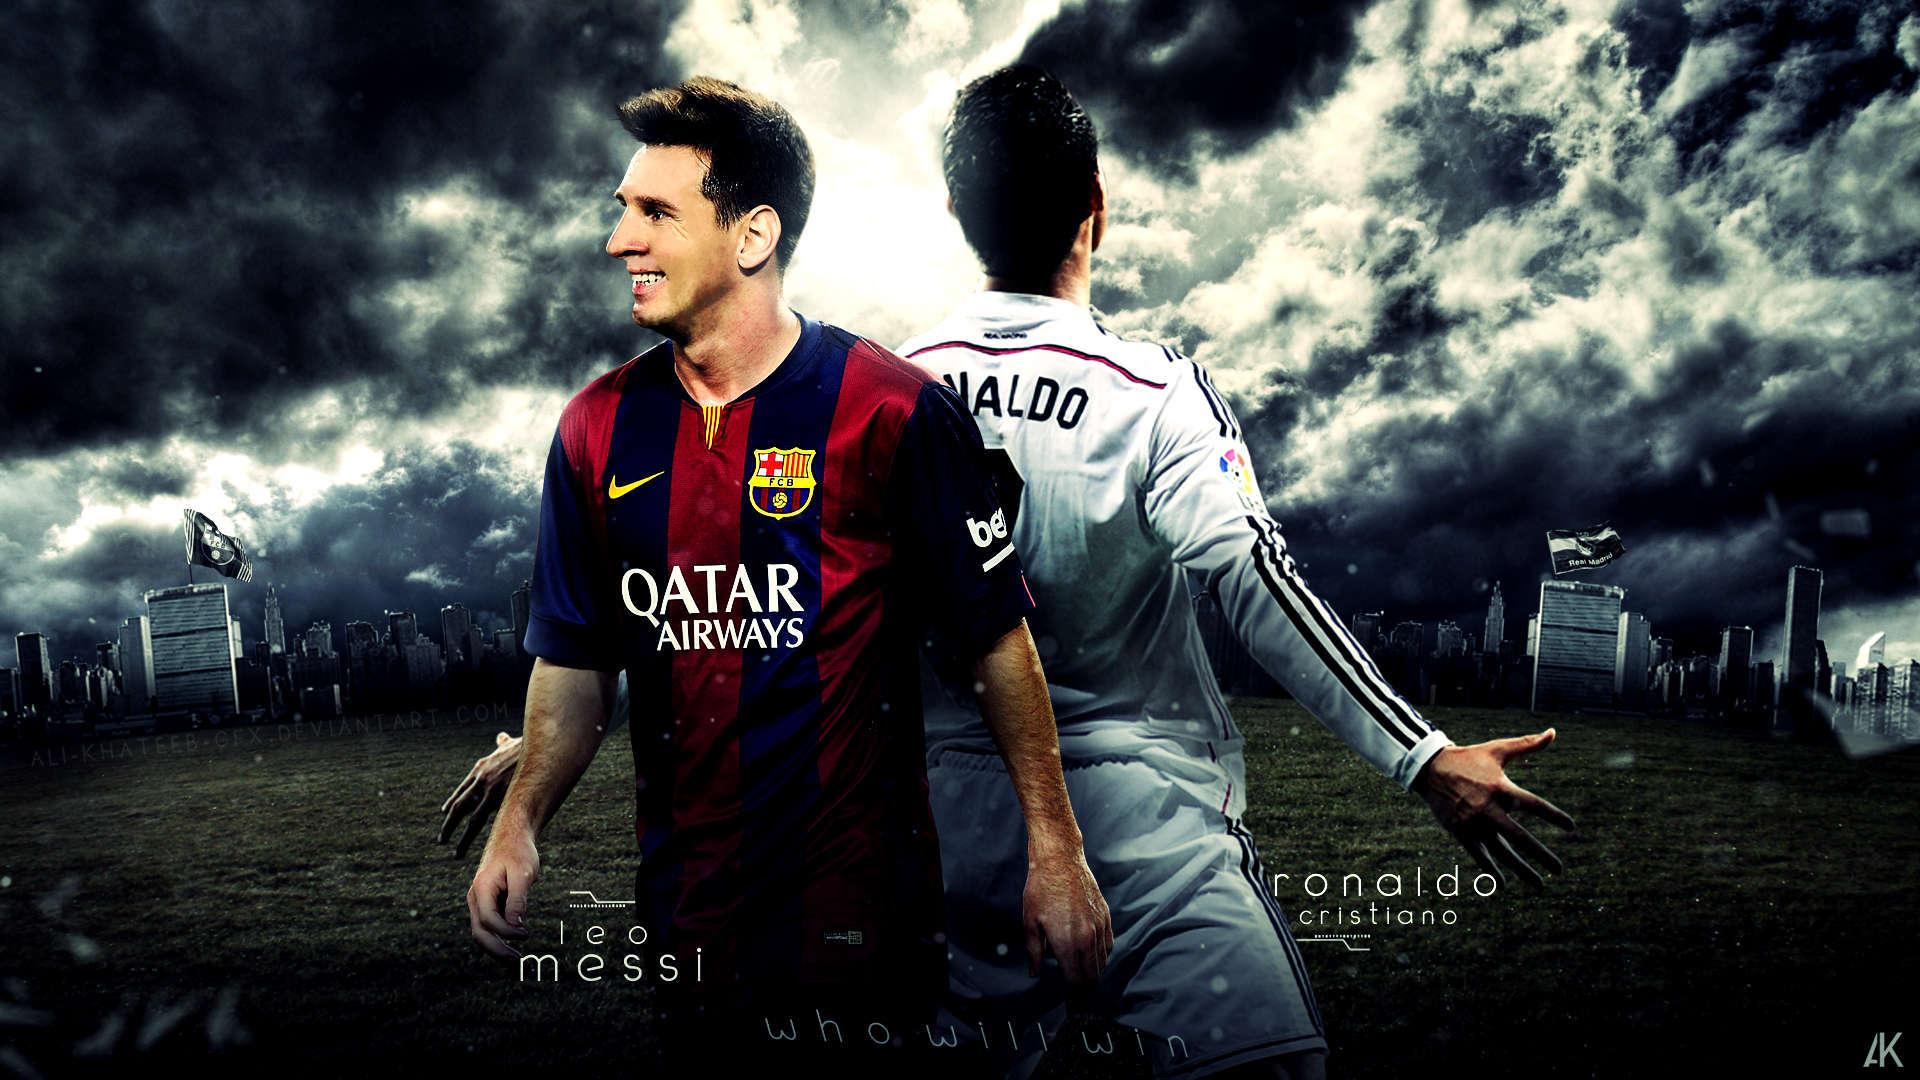 Messi Vs Ronaldo Background Sdeerwallpaper. incognito